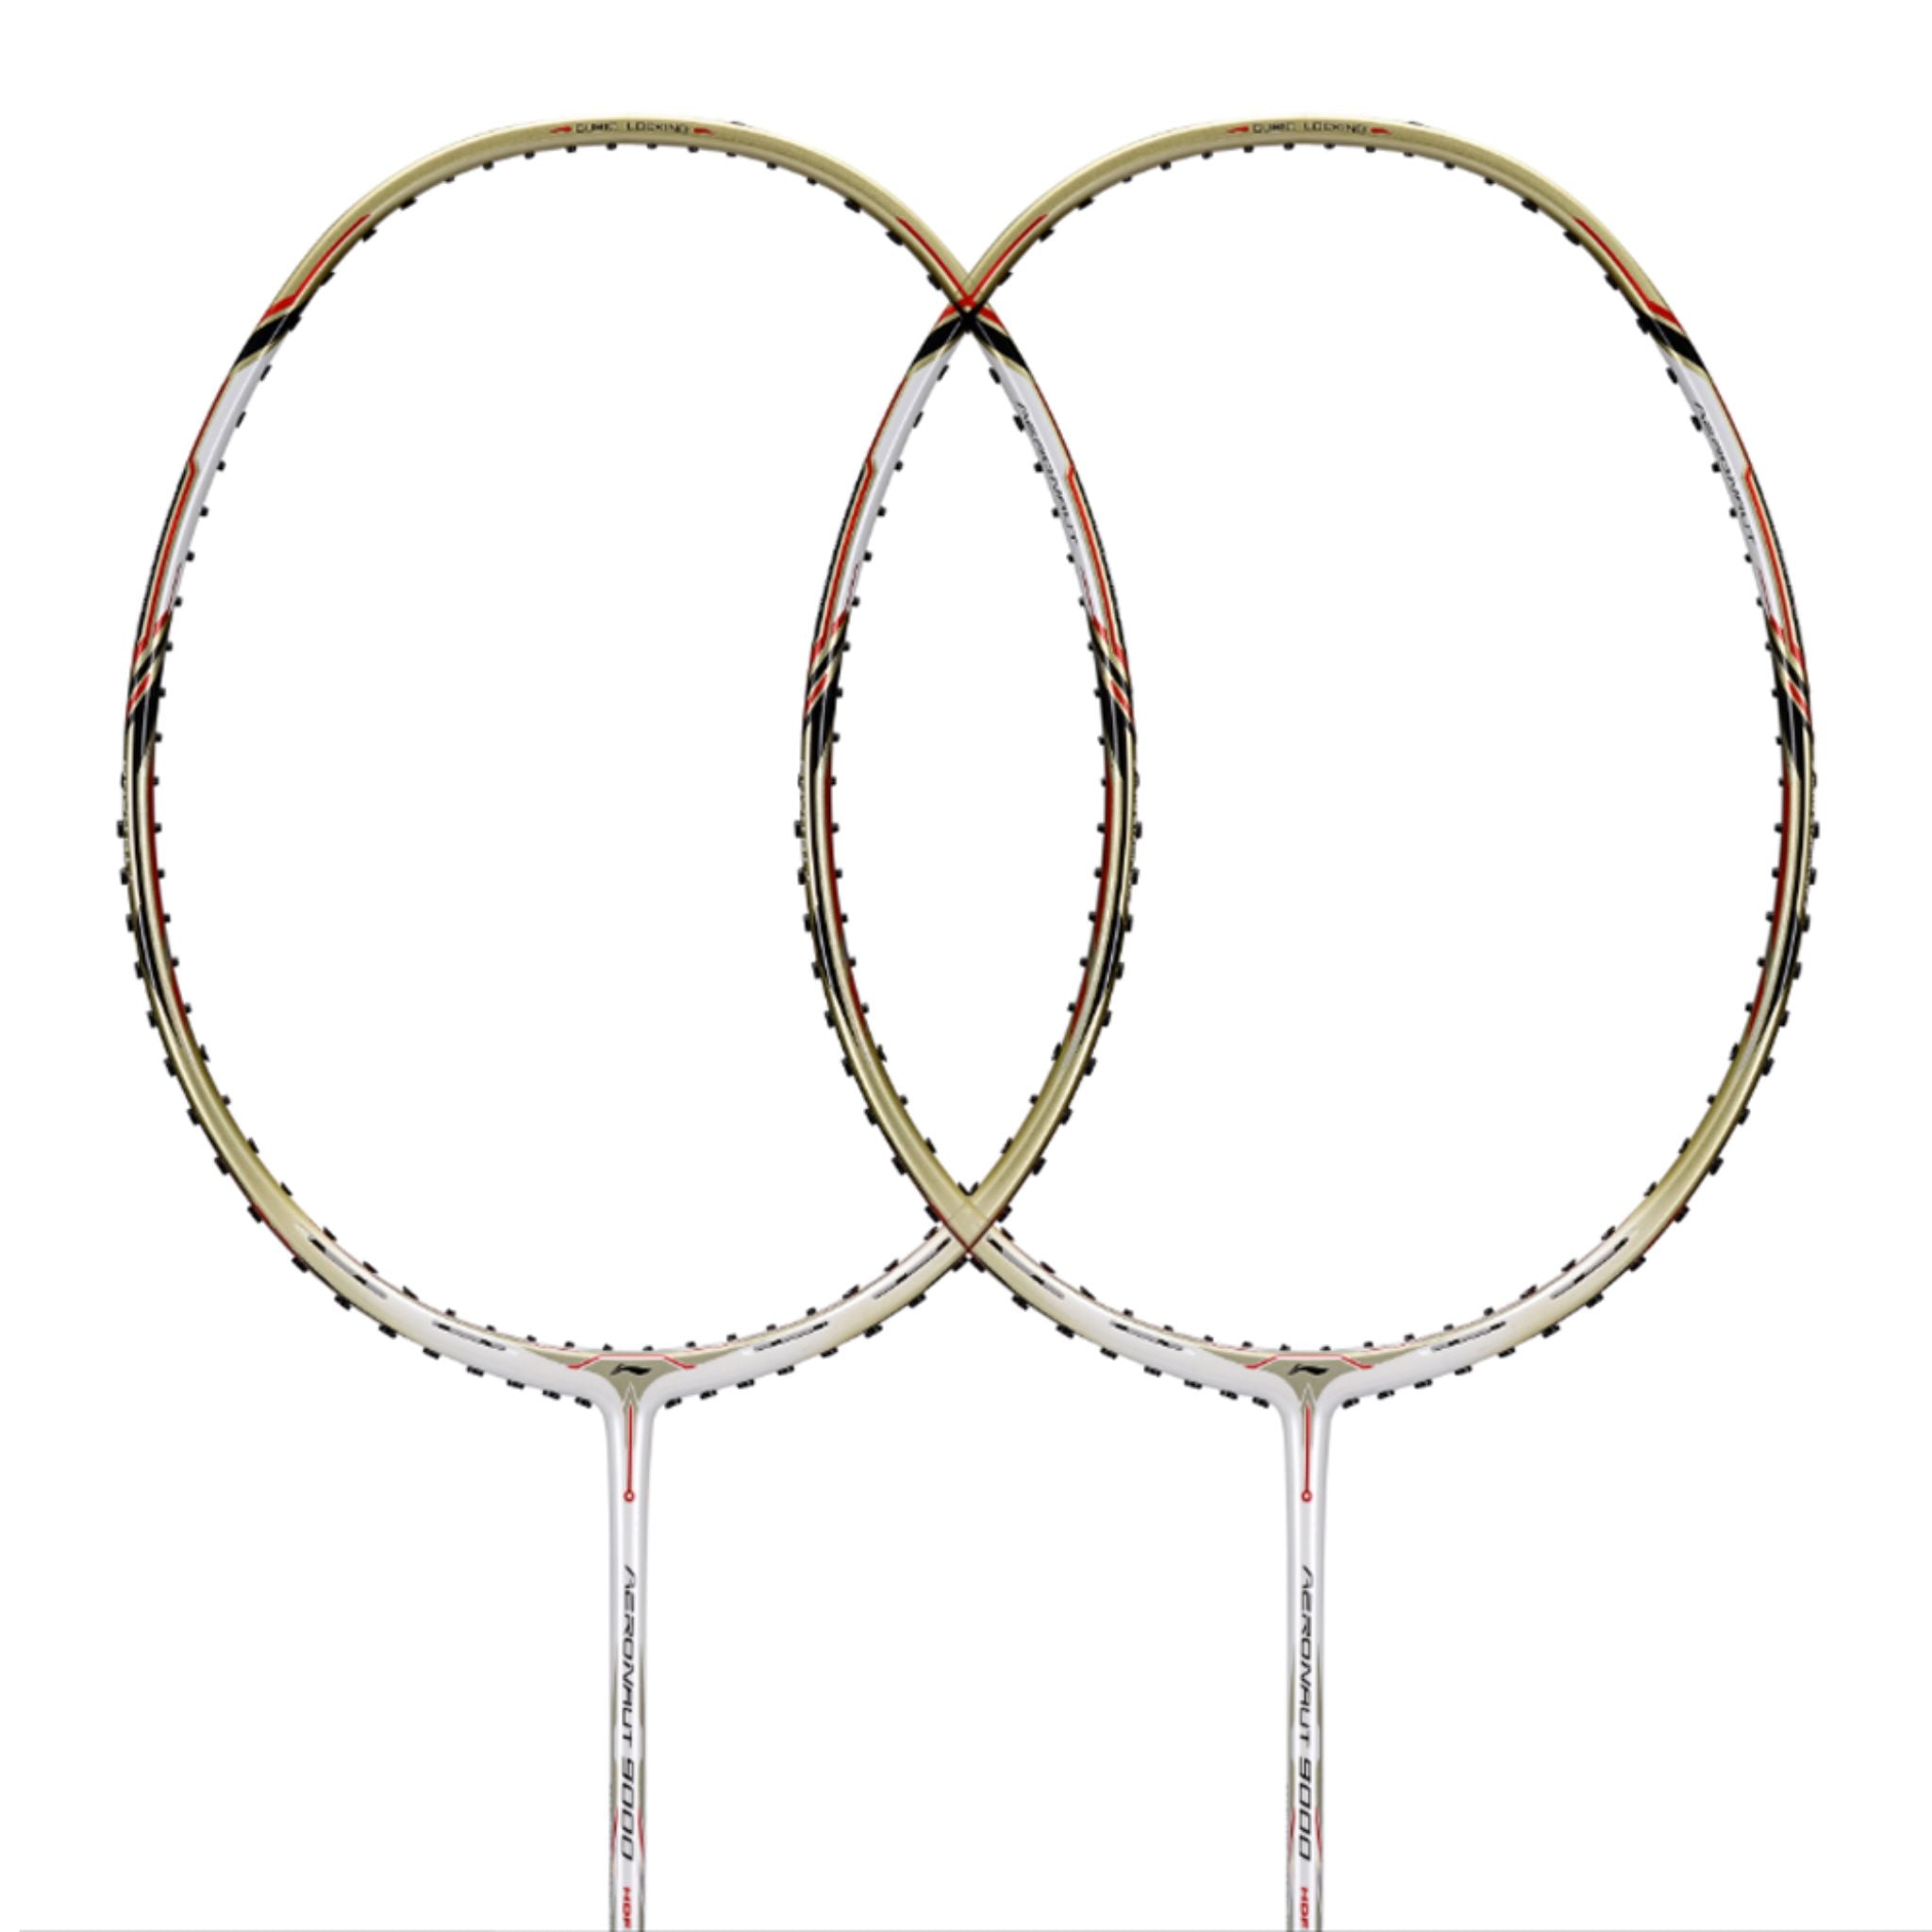 LI-NING Aeronaut 9000 Badminton Racquet